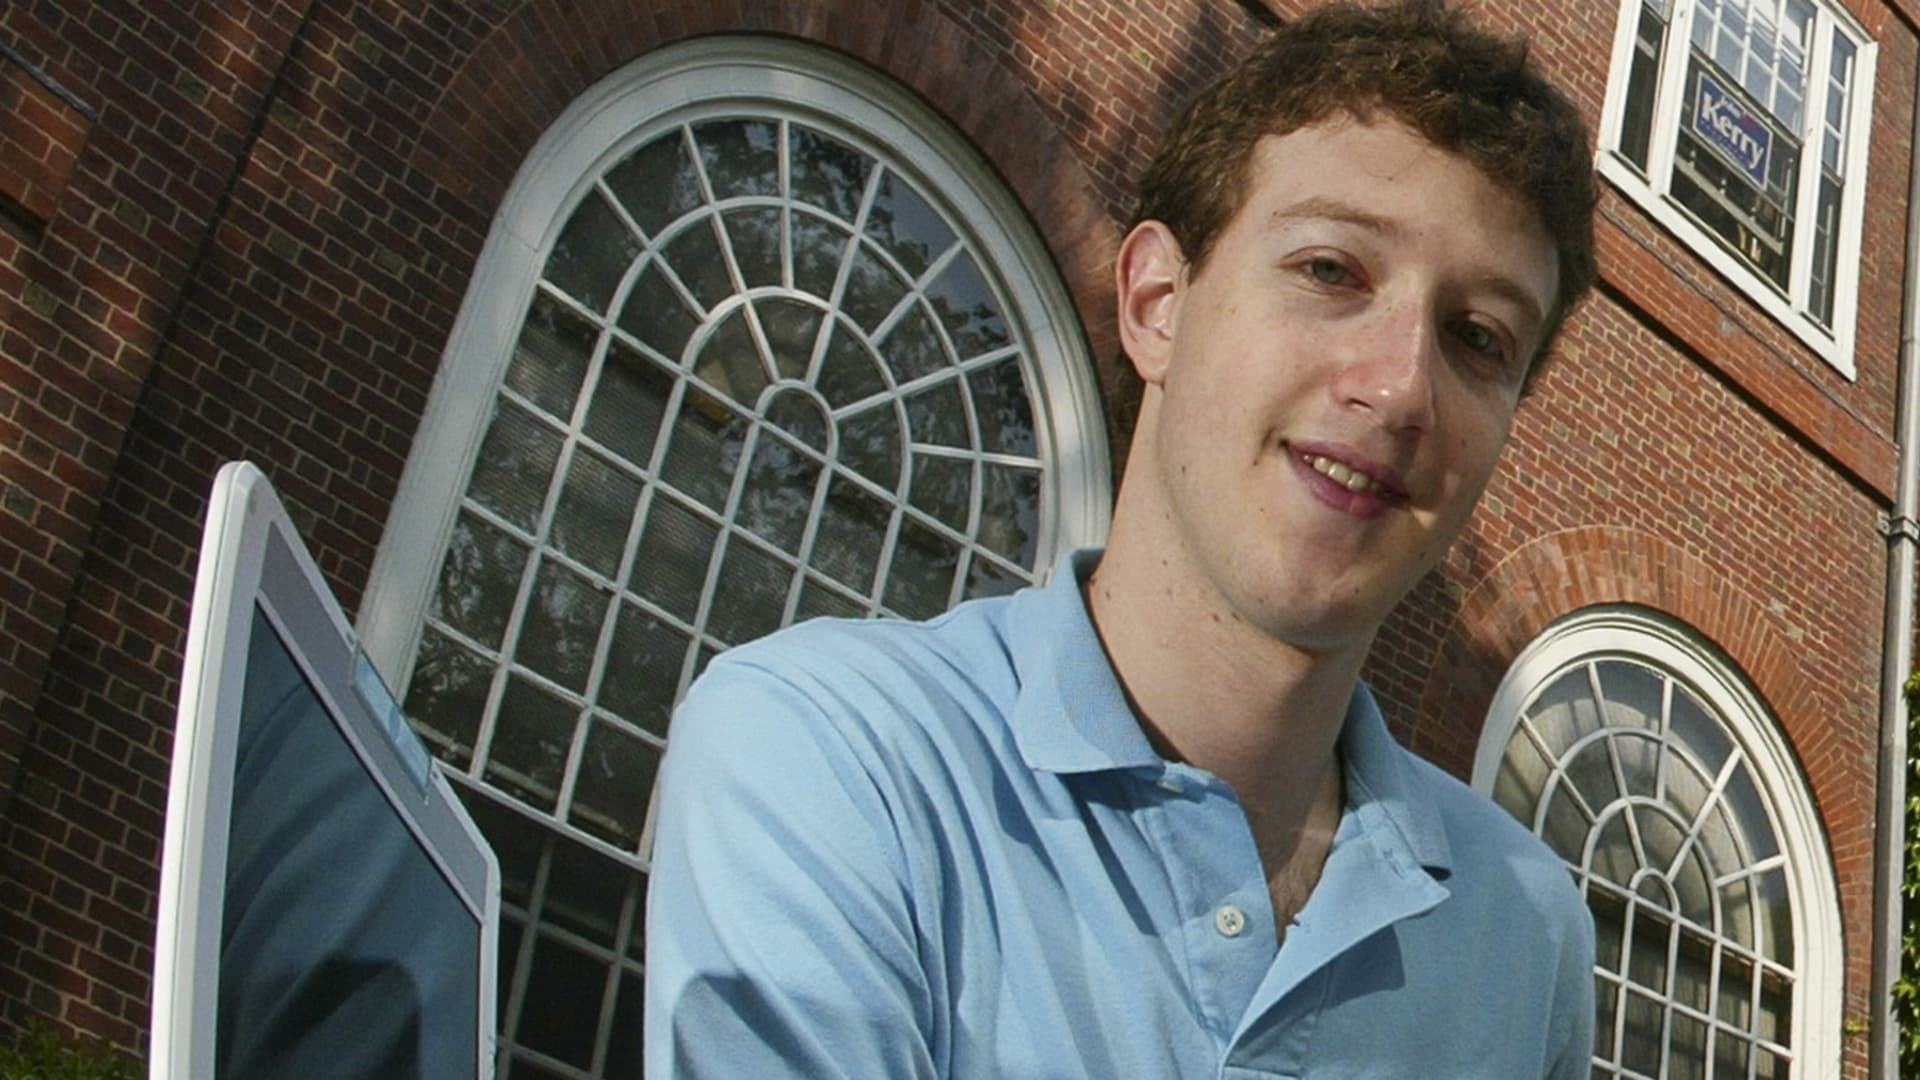 See 19-year-old Mark Zuckerberg explain 'The Facebook' in 2004